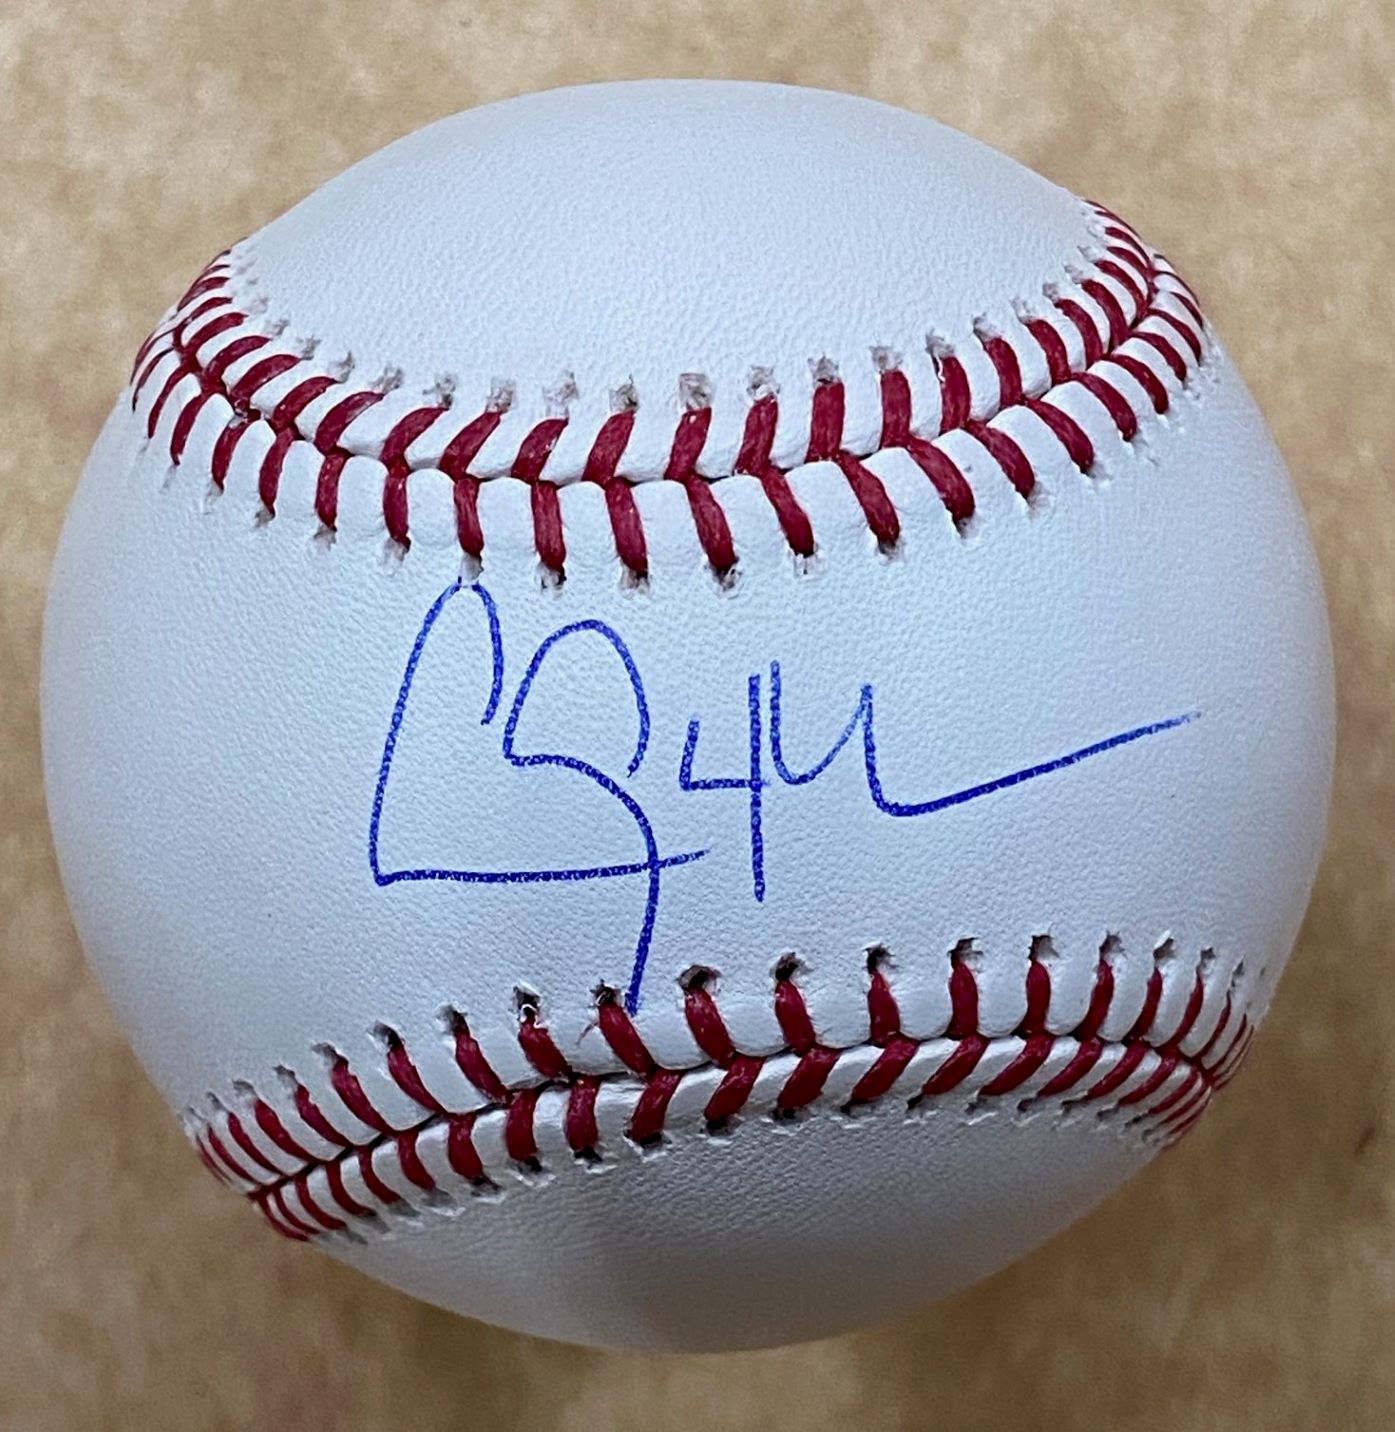 Clayton Kershaw Autographed 2020 World Series Baseball